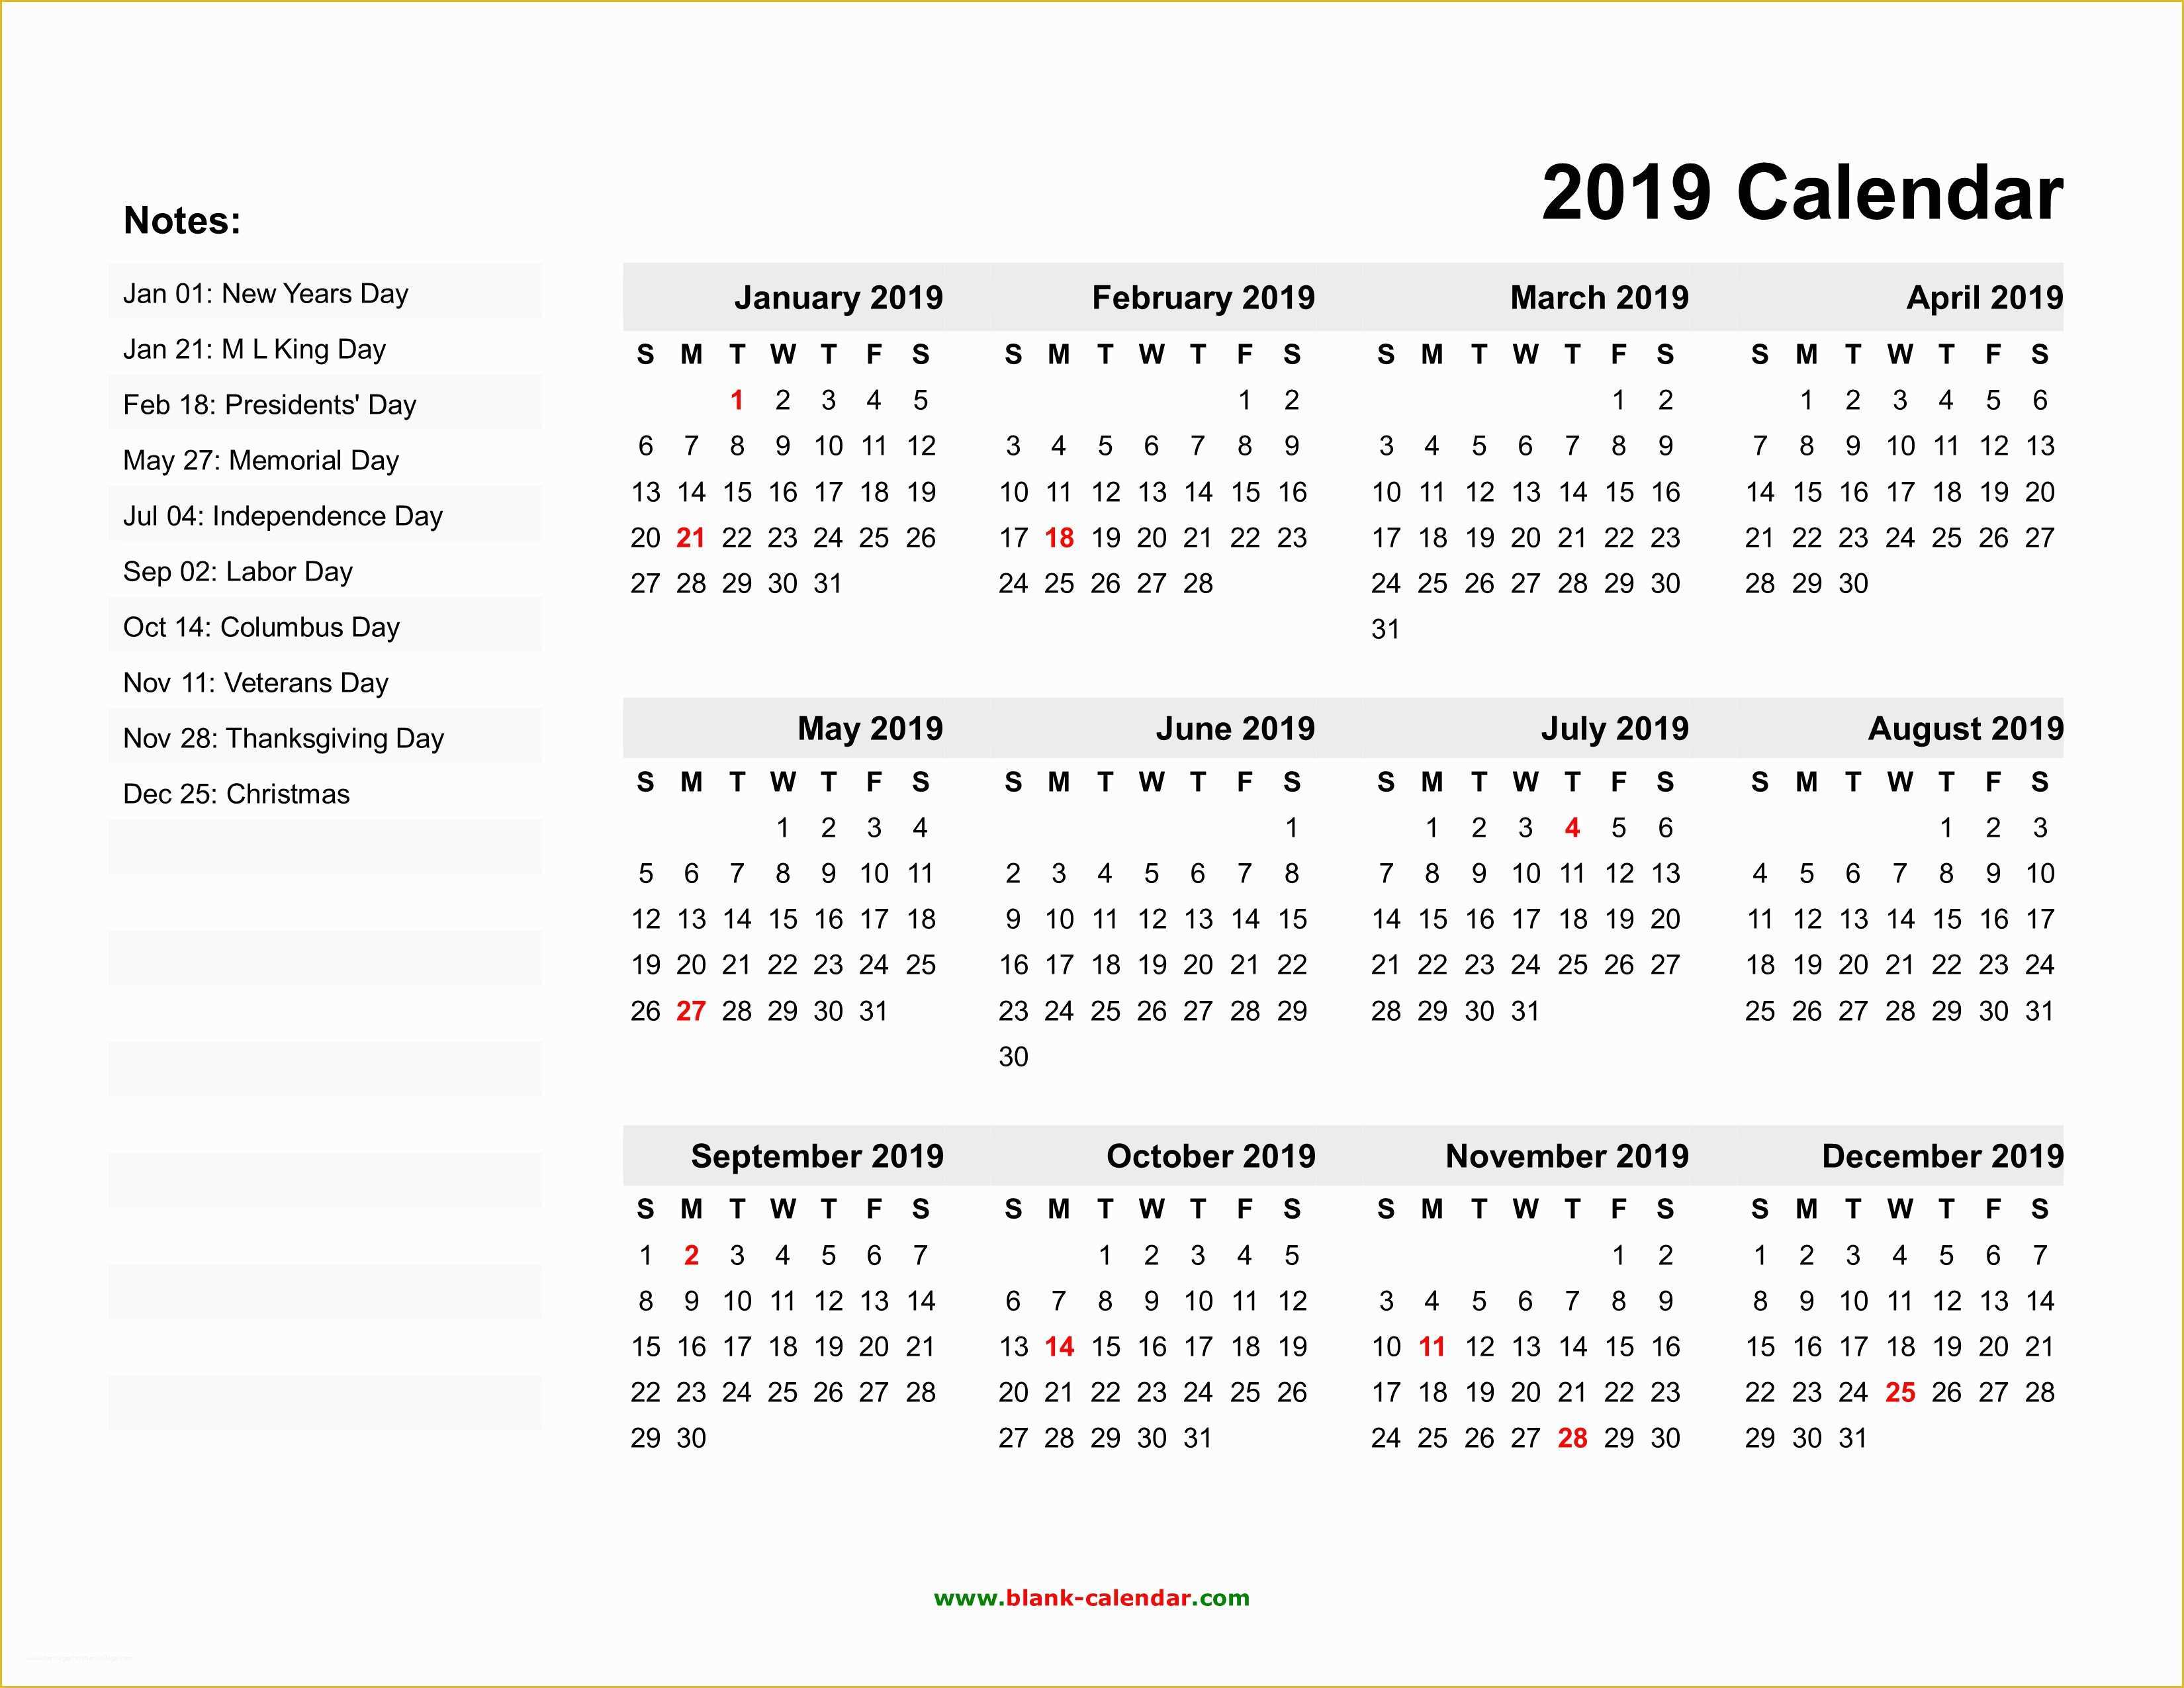 Free Calendar Template 2019 Of Yearly Calendar 2019